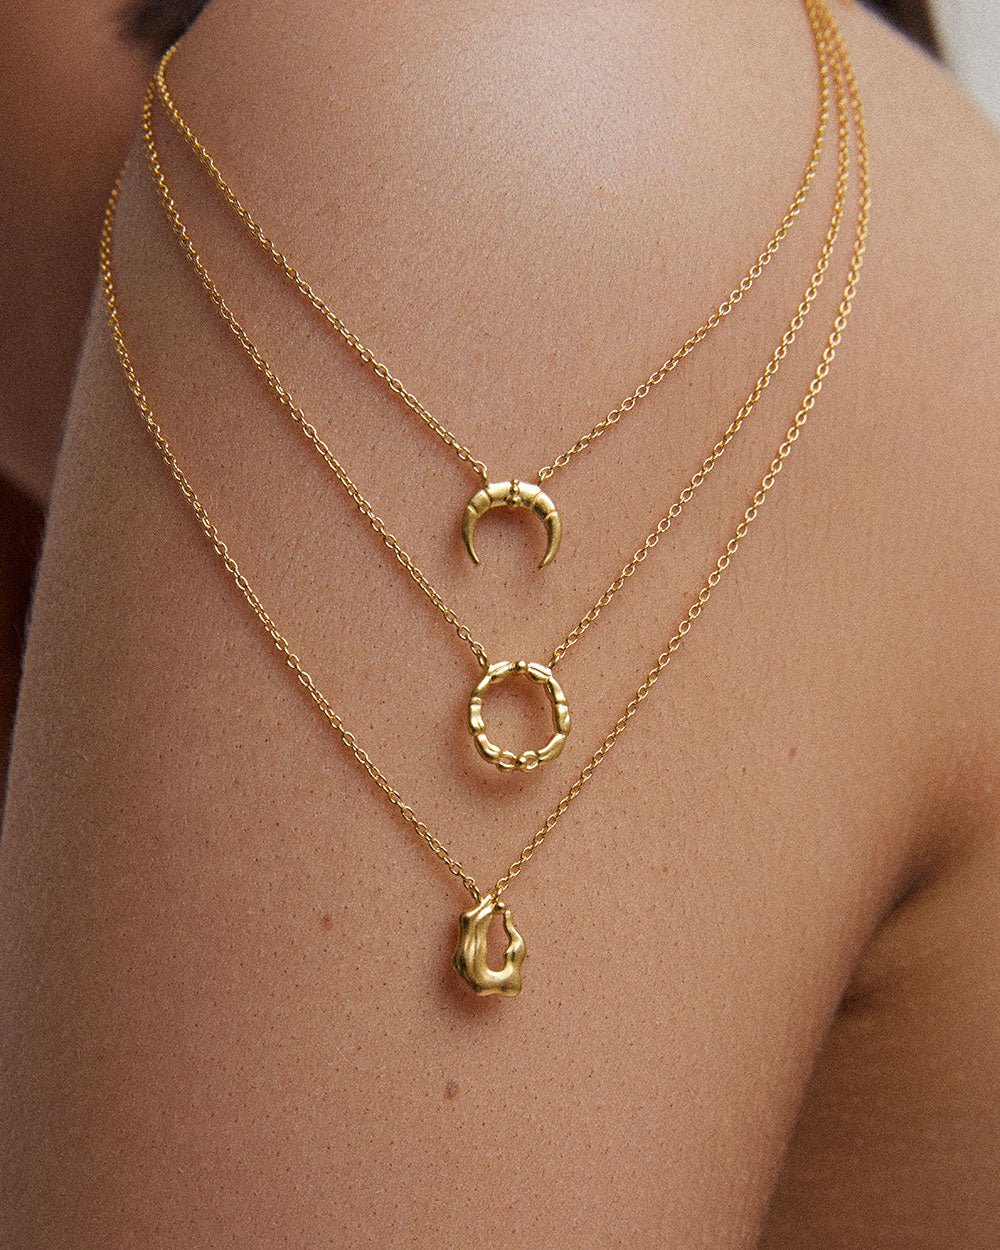 Star sign necklace - Gold-coloured/Scorpio - Ladies | H&M IN